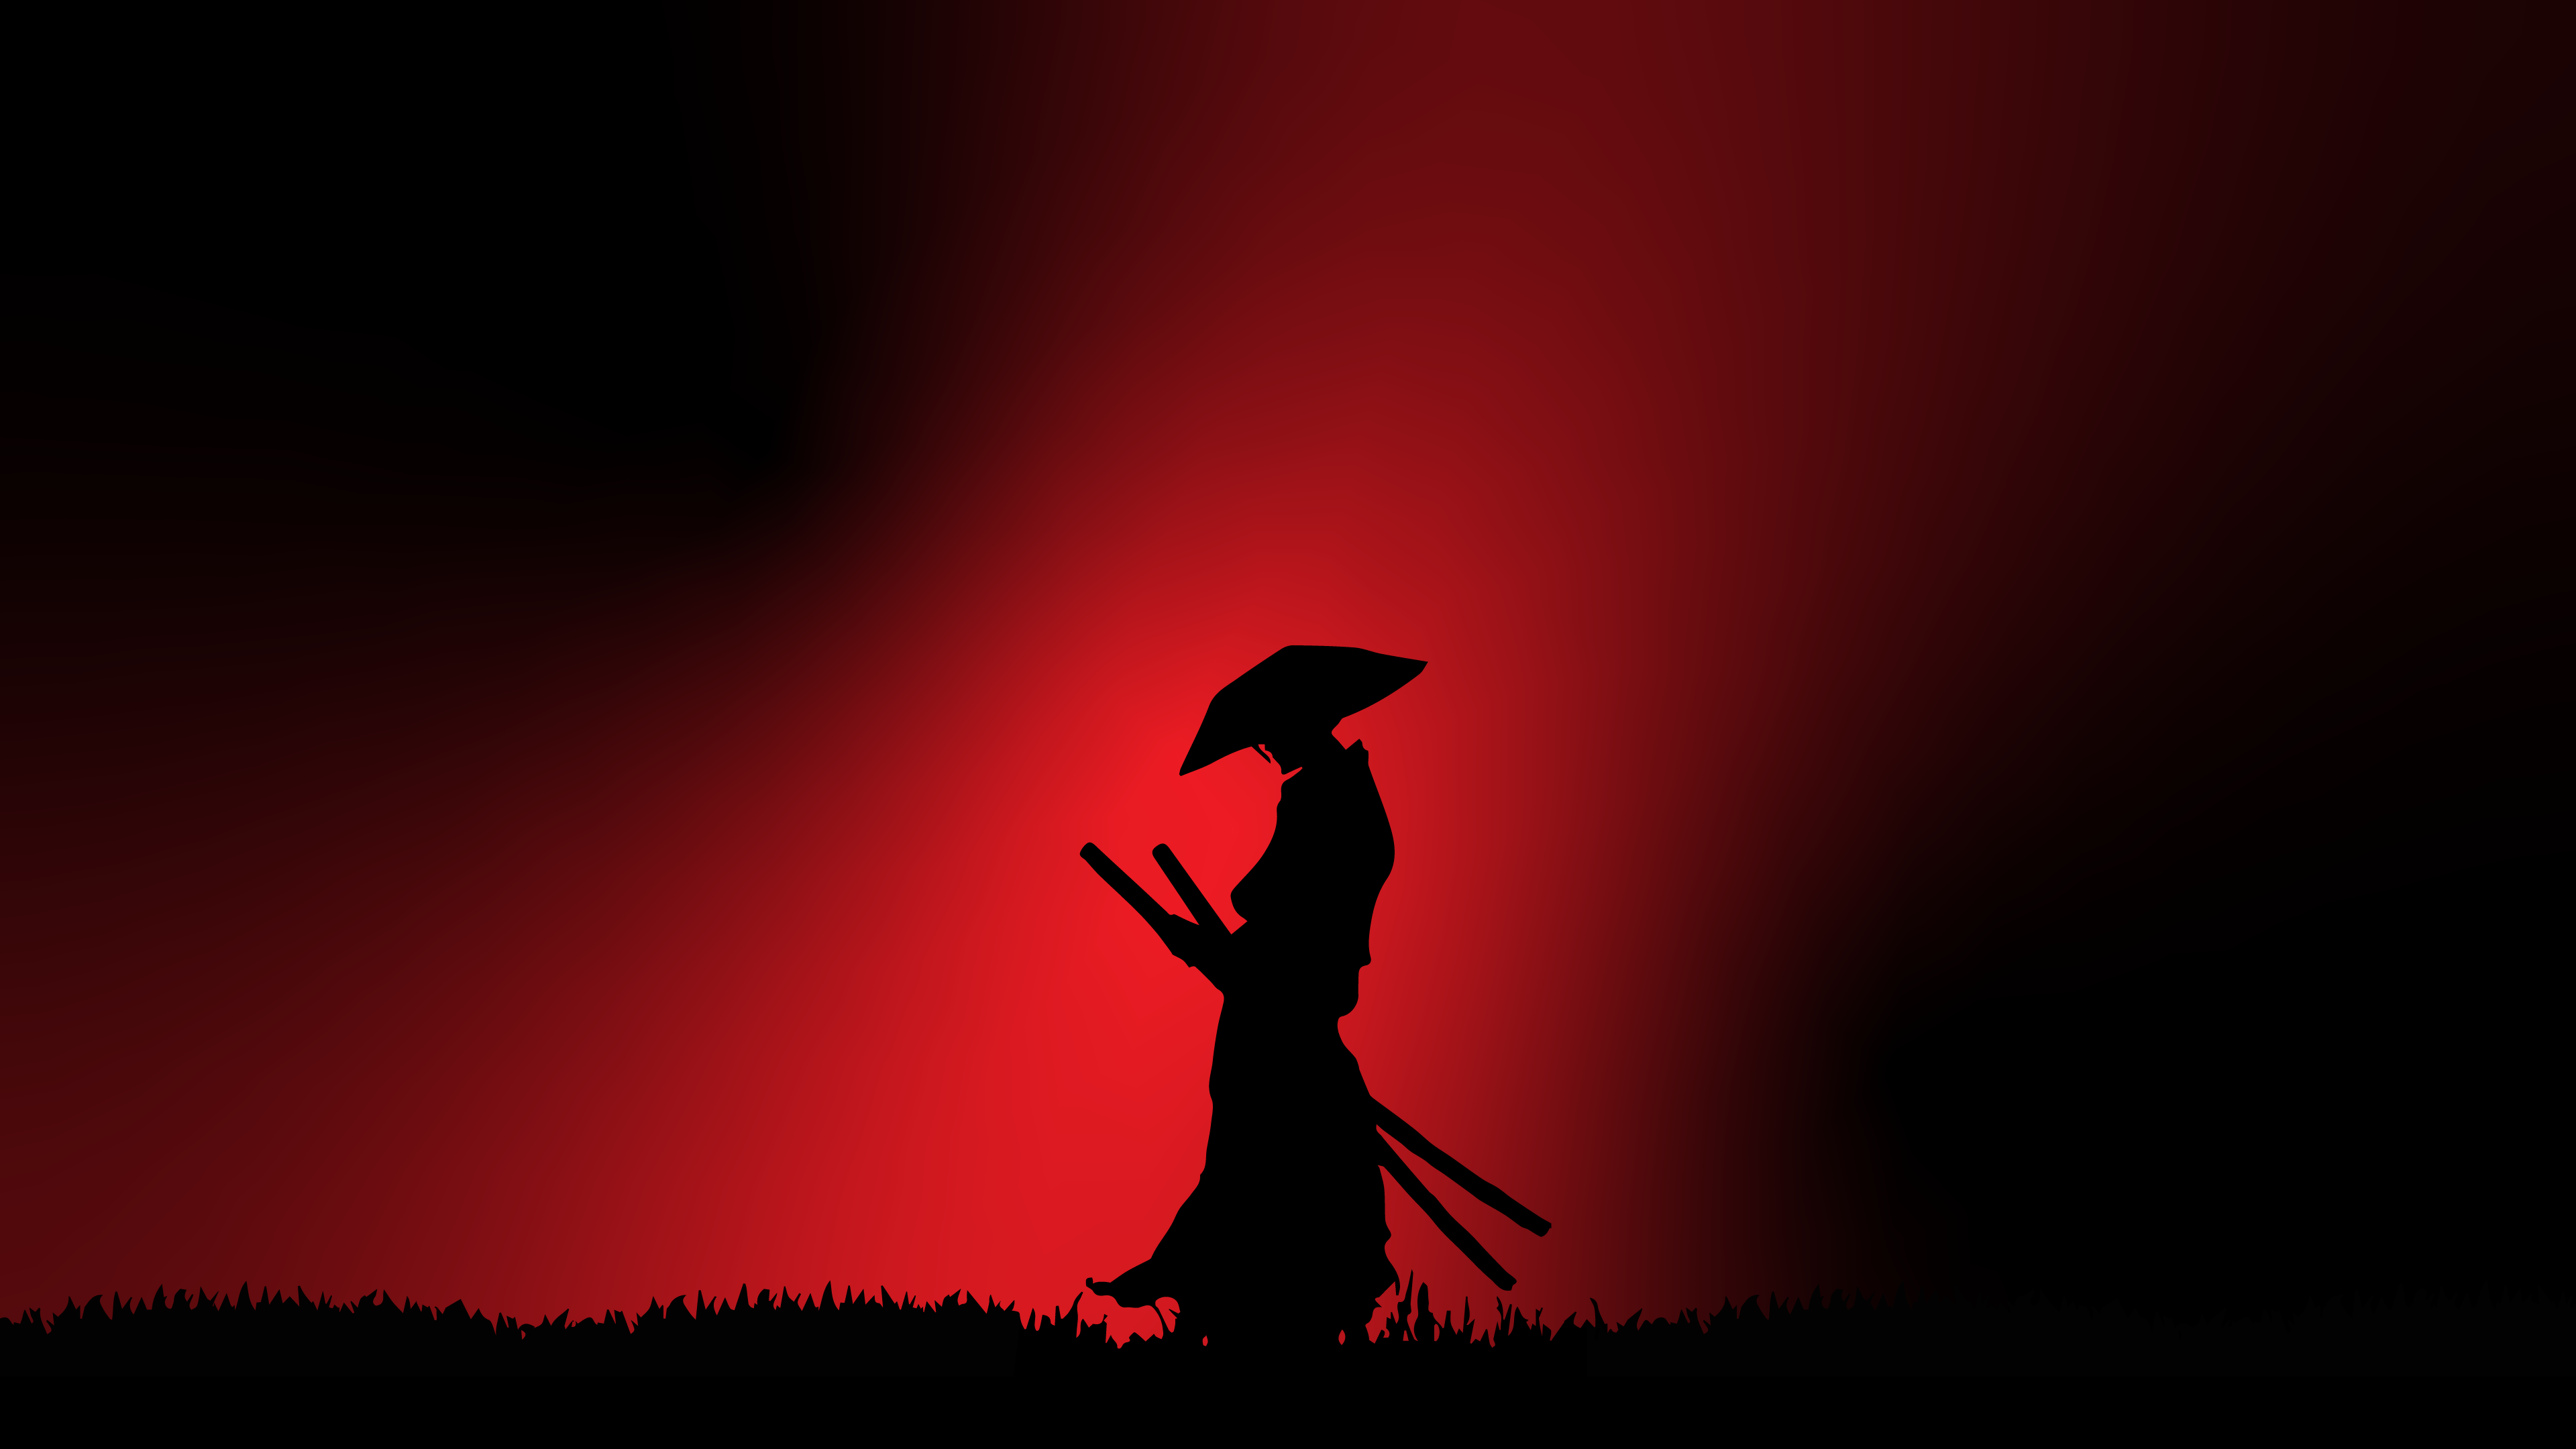 Samurai red 4k (3840x2160). Samurai wallpaper, Samurai artwork, Aesthetic desktop wallpaper